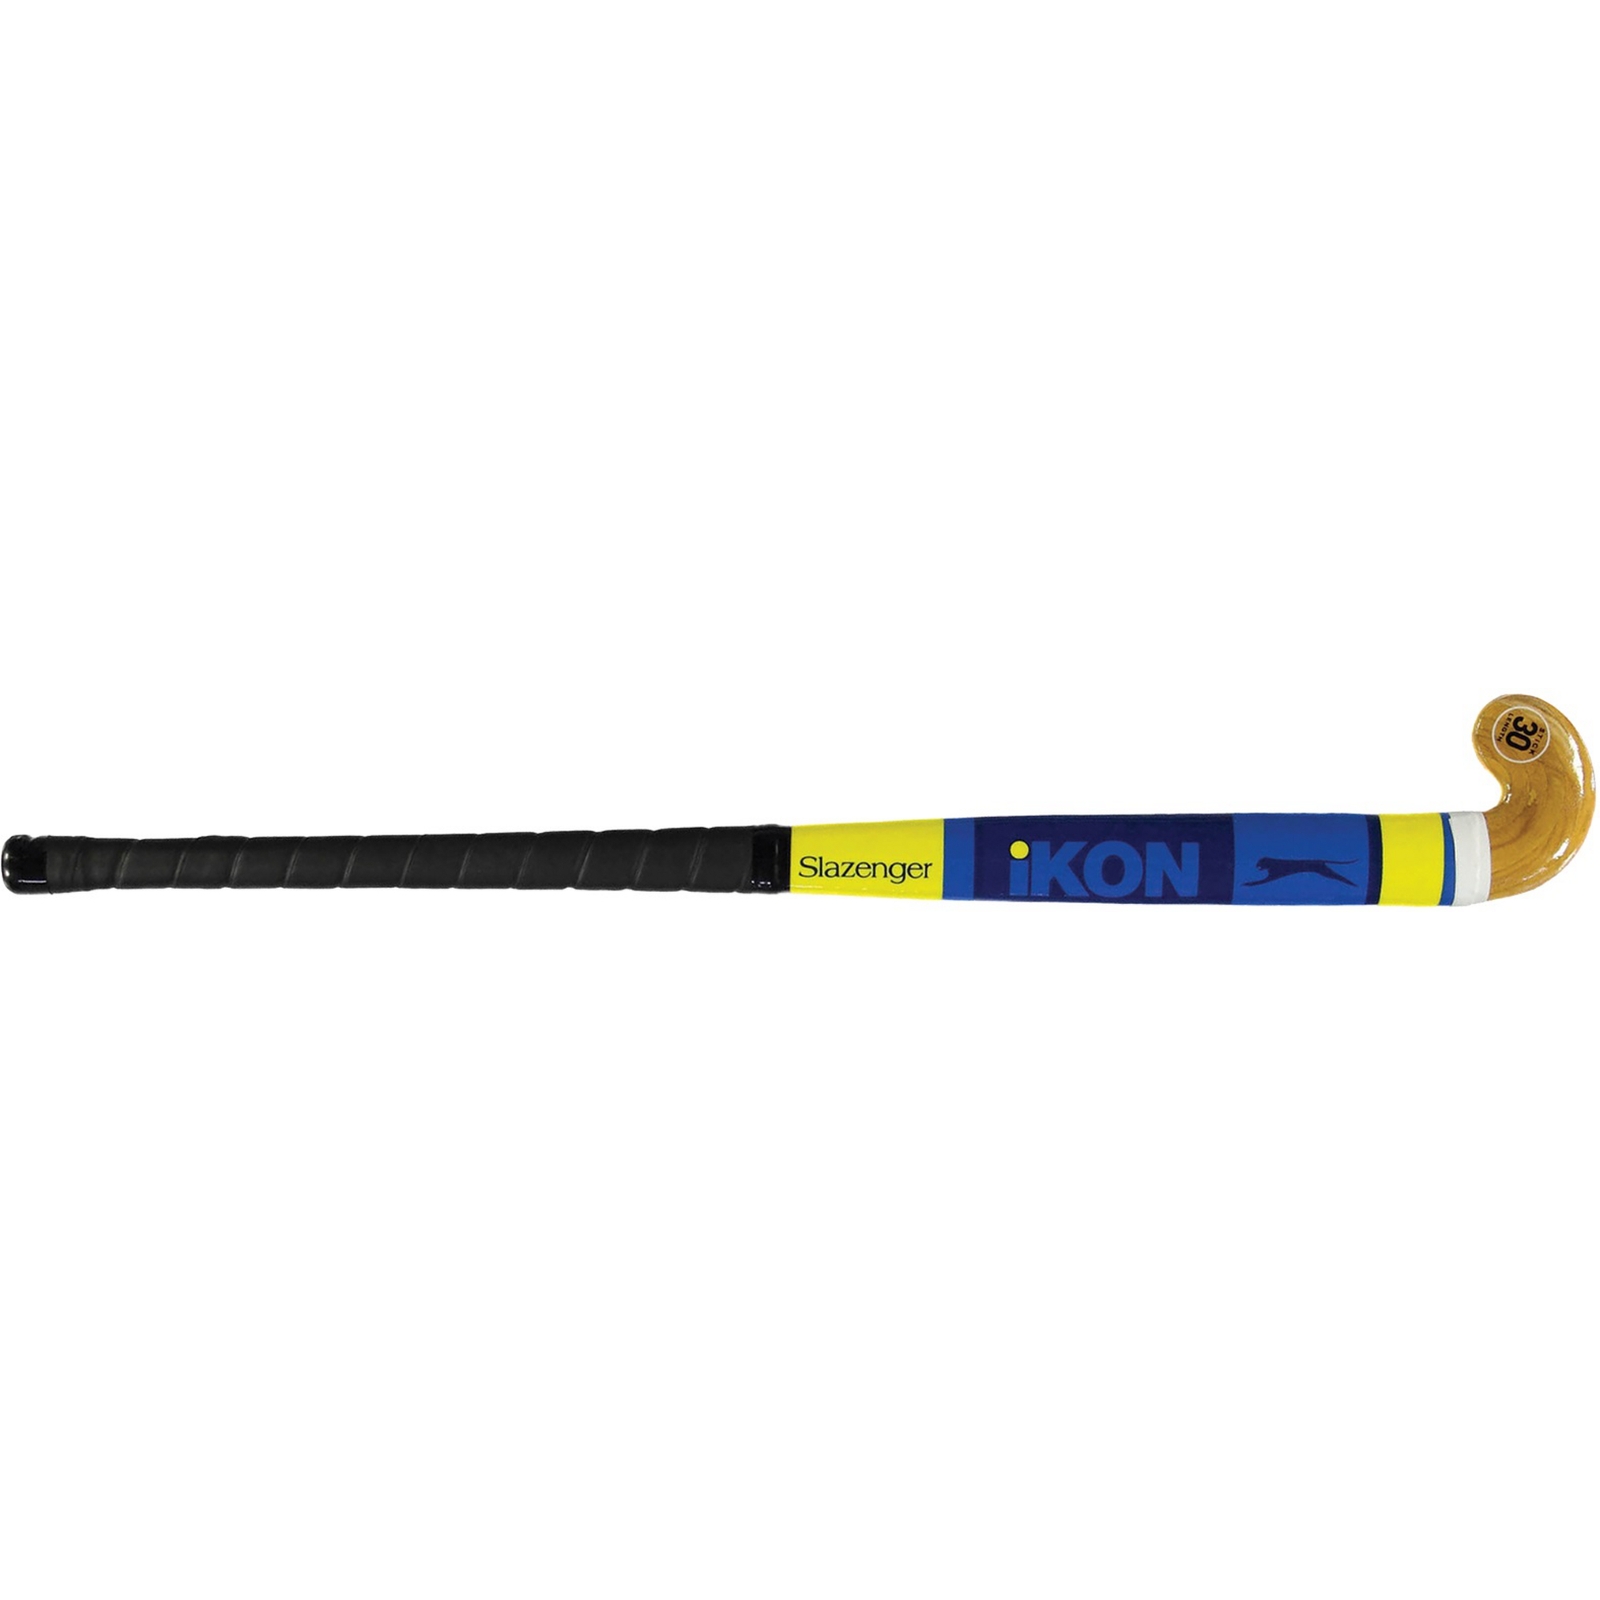 Slazenger Ikon Hockey Stick - 30"